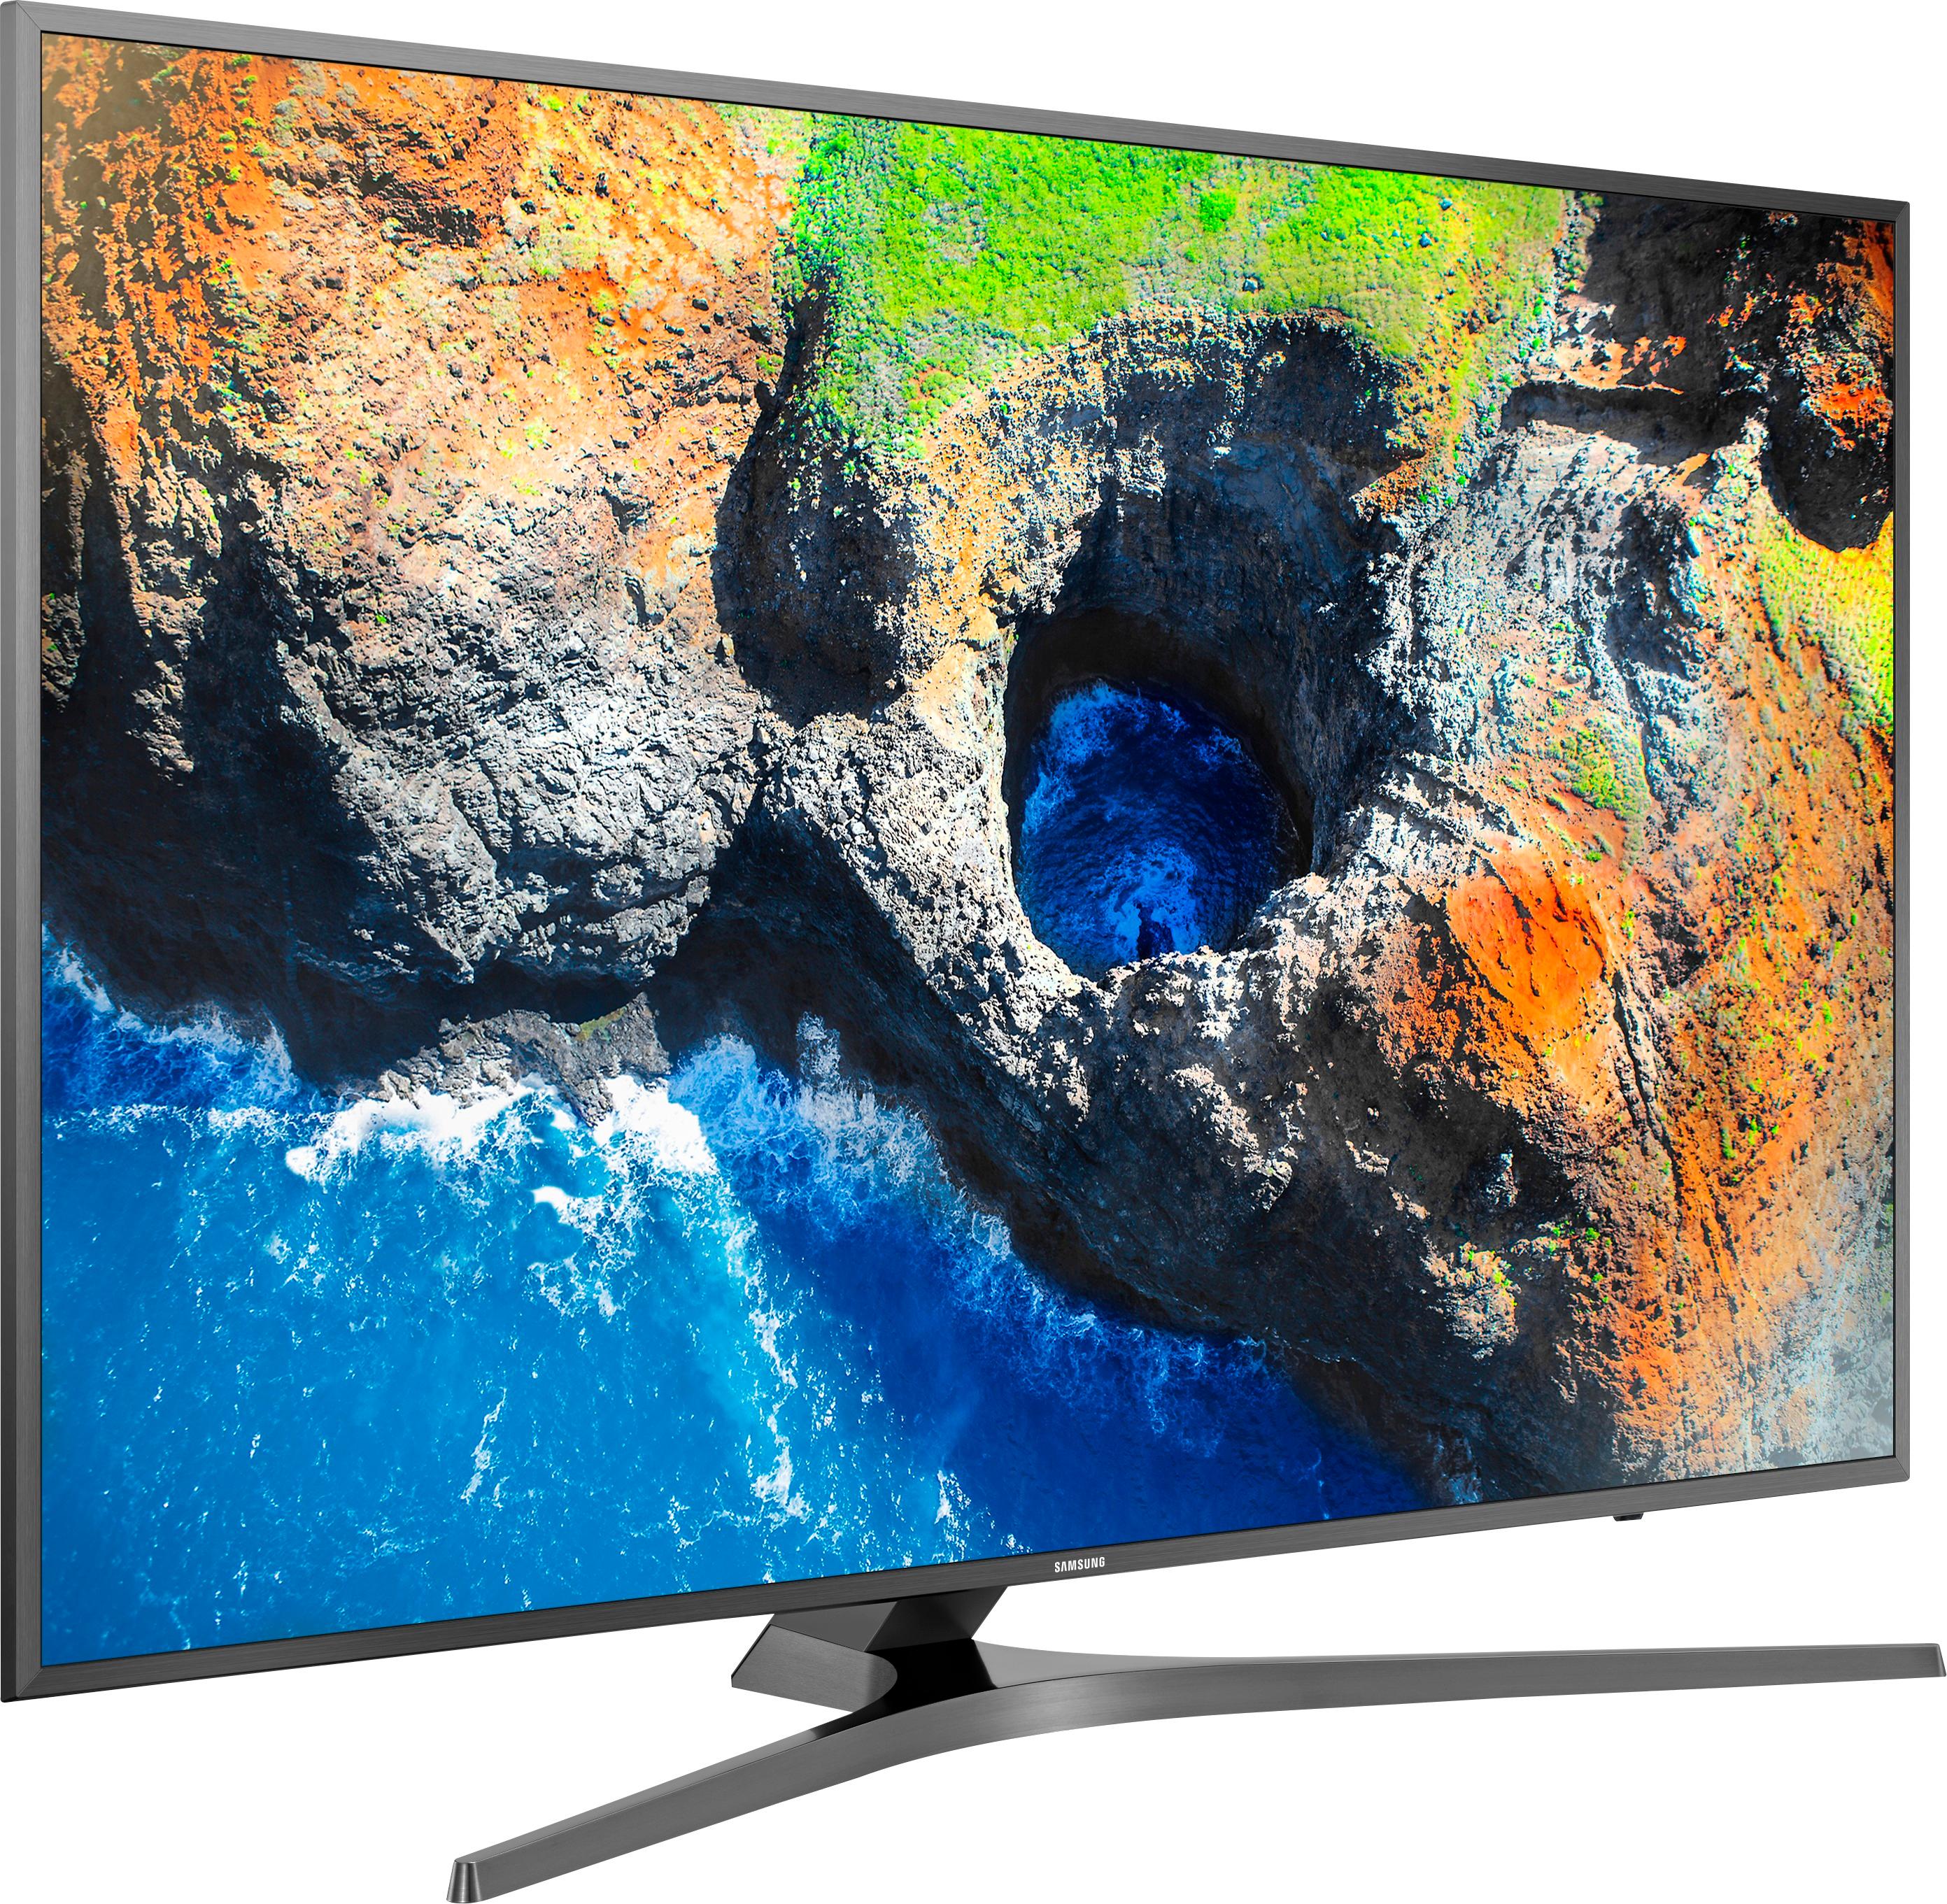 Télévision Solstar 65″ (165 cm) LED Smart TV 4K UHD – Général Cool